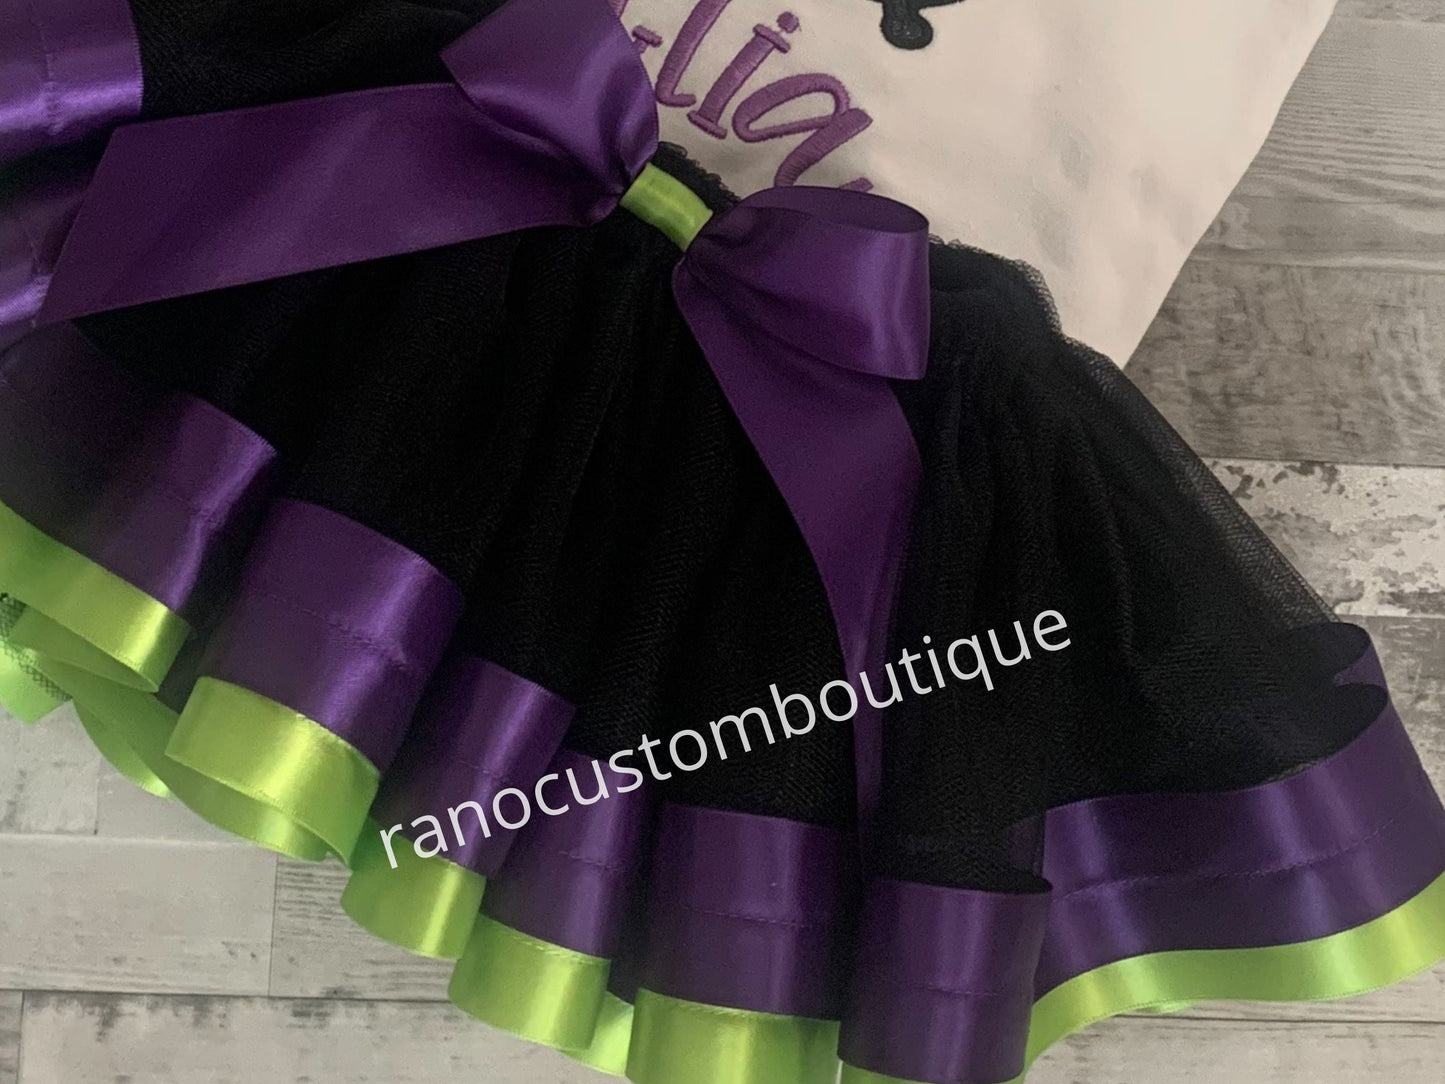 Black Tutu Skirt, Birthday Party Girl Tutu Skirt, Purple and Green Satin Ribbon Trim Tutu, Black Halloween Tutu Skirt